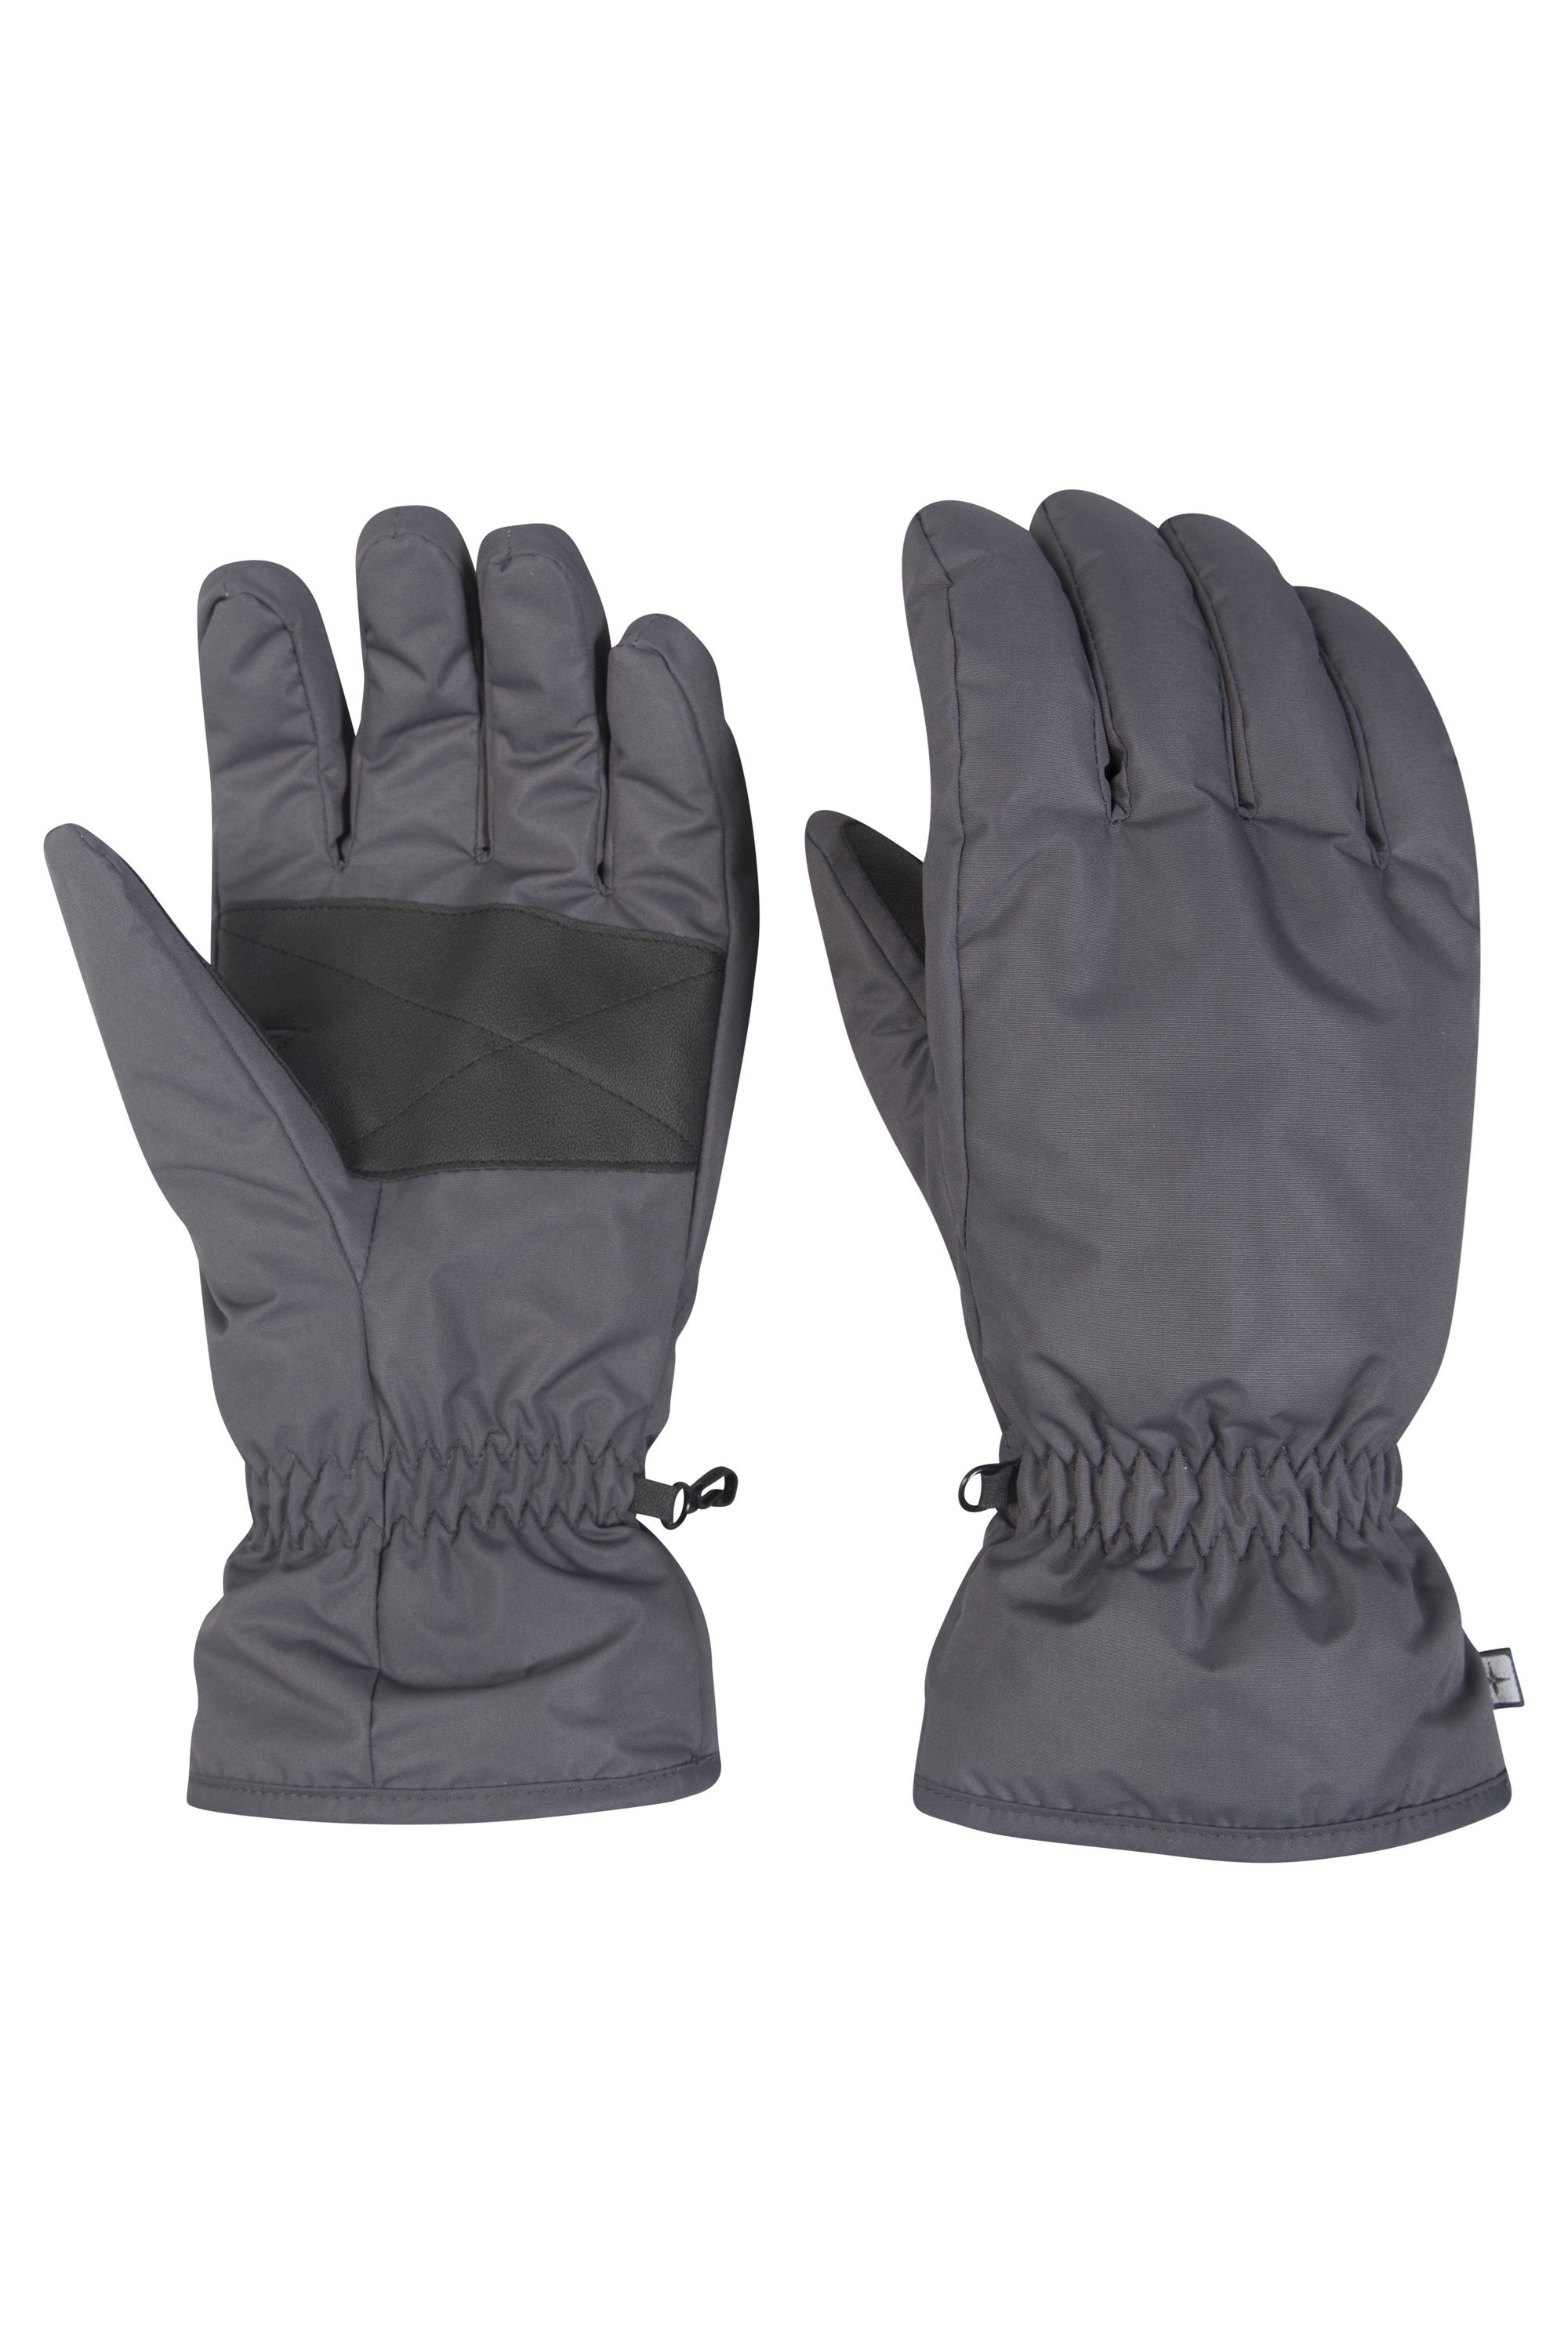 Fleece Lined Warm Glove Textured Palm Snowproof Marca: Mountain WarehouseMountain Warehouse Womens Ski Gloves for Winter Snowboarding 